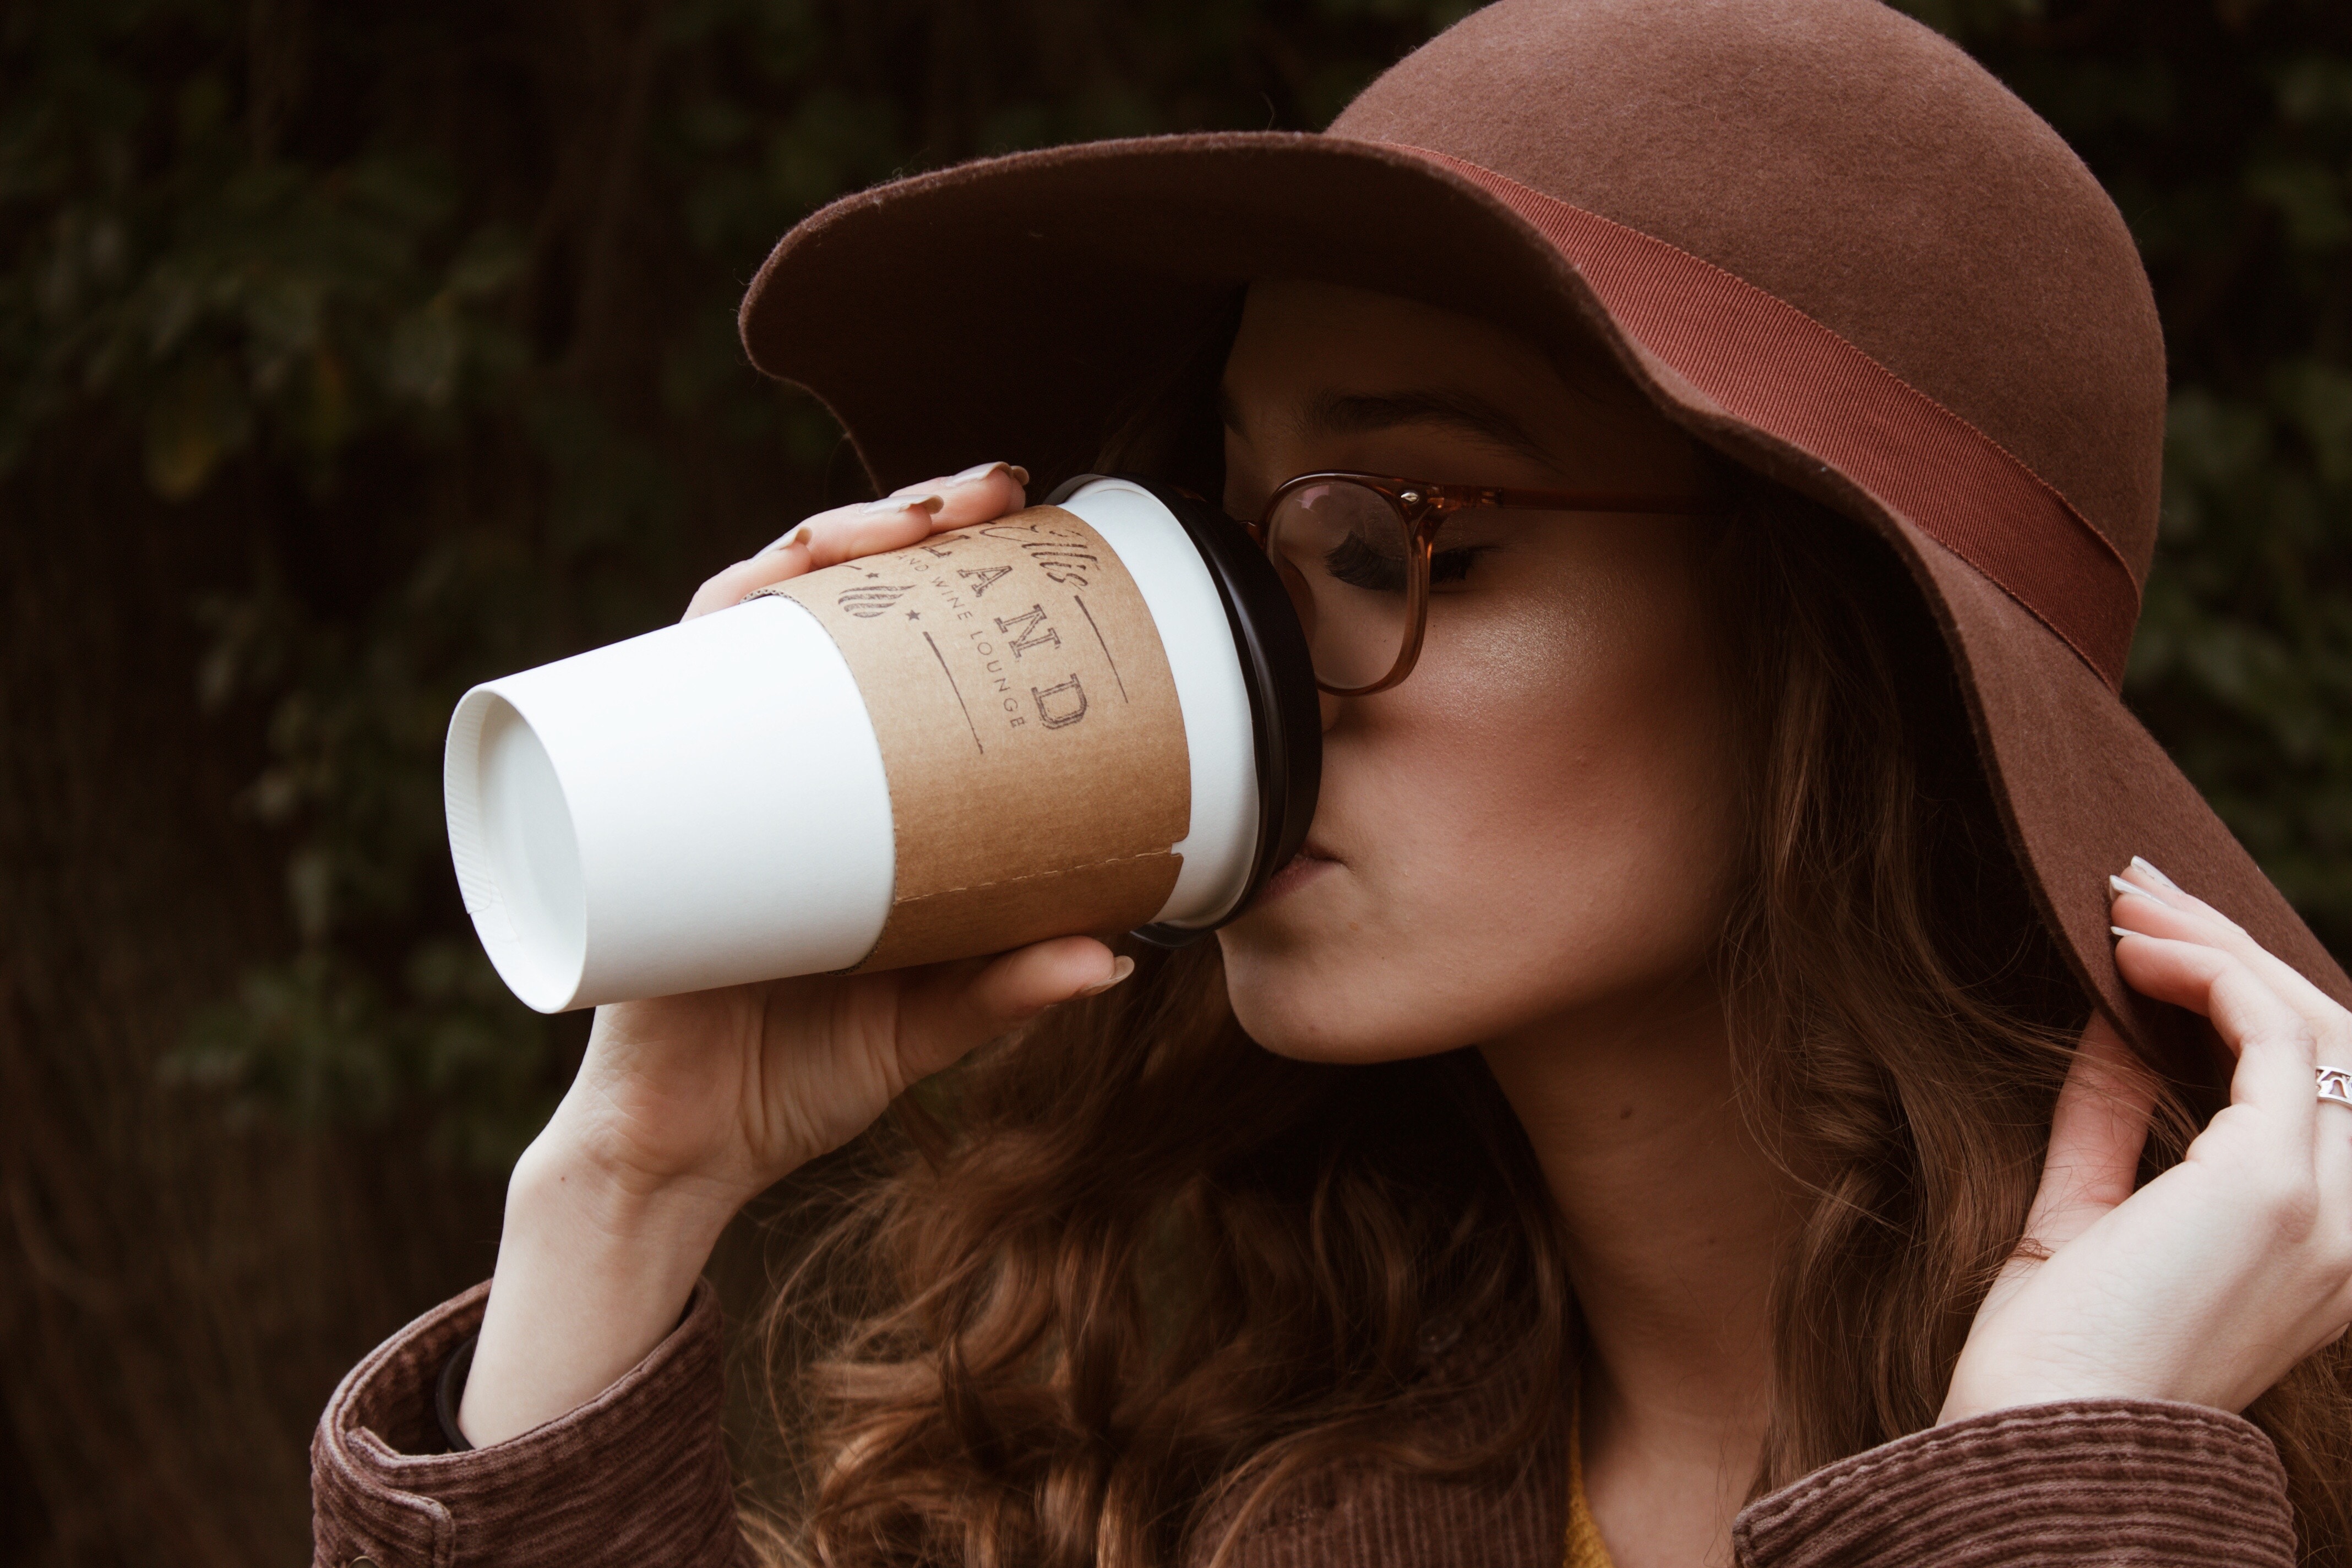 Фото с кофе. Девушка пьет кофе. Девушка со стаканом кофе. Девушка со стаканчиком кофе. Стаканчик кофе.